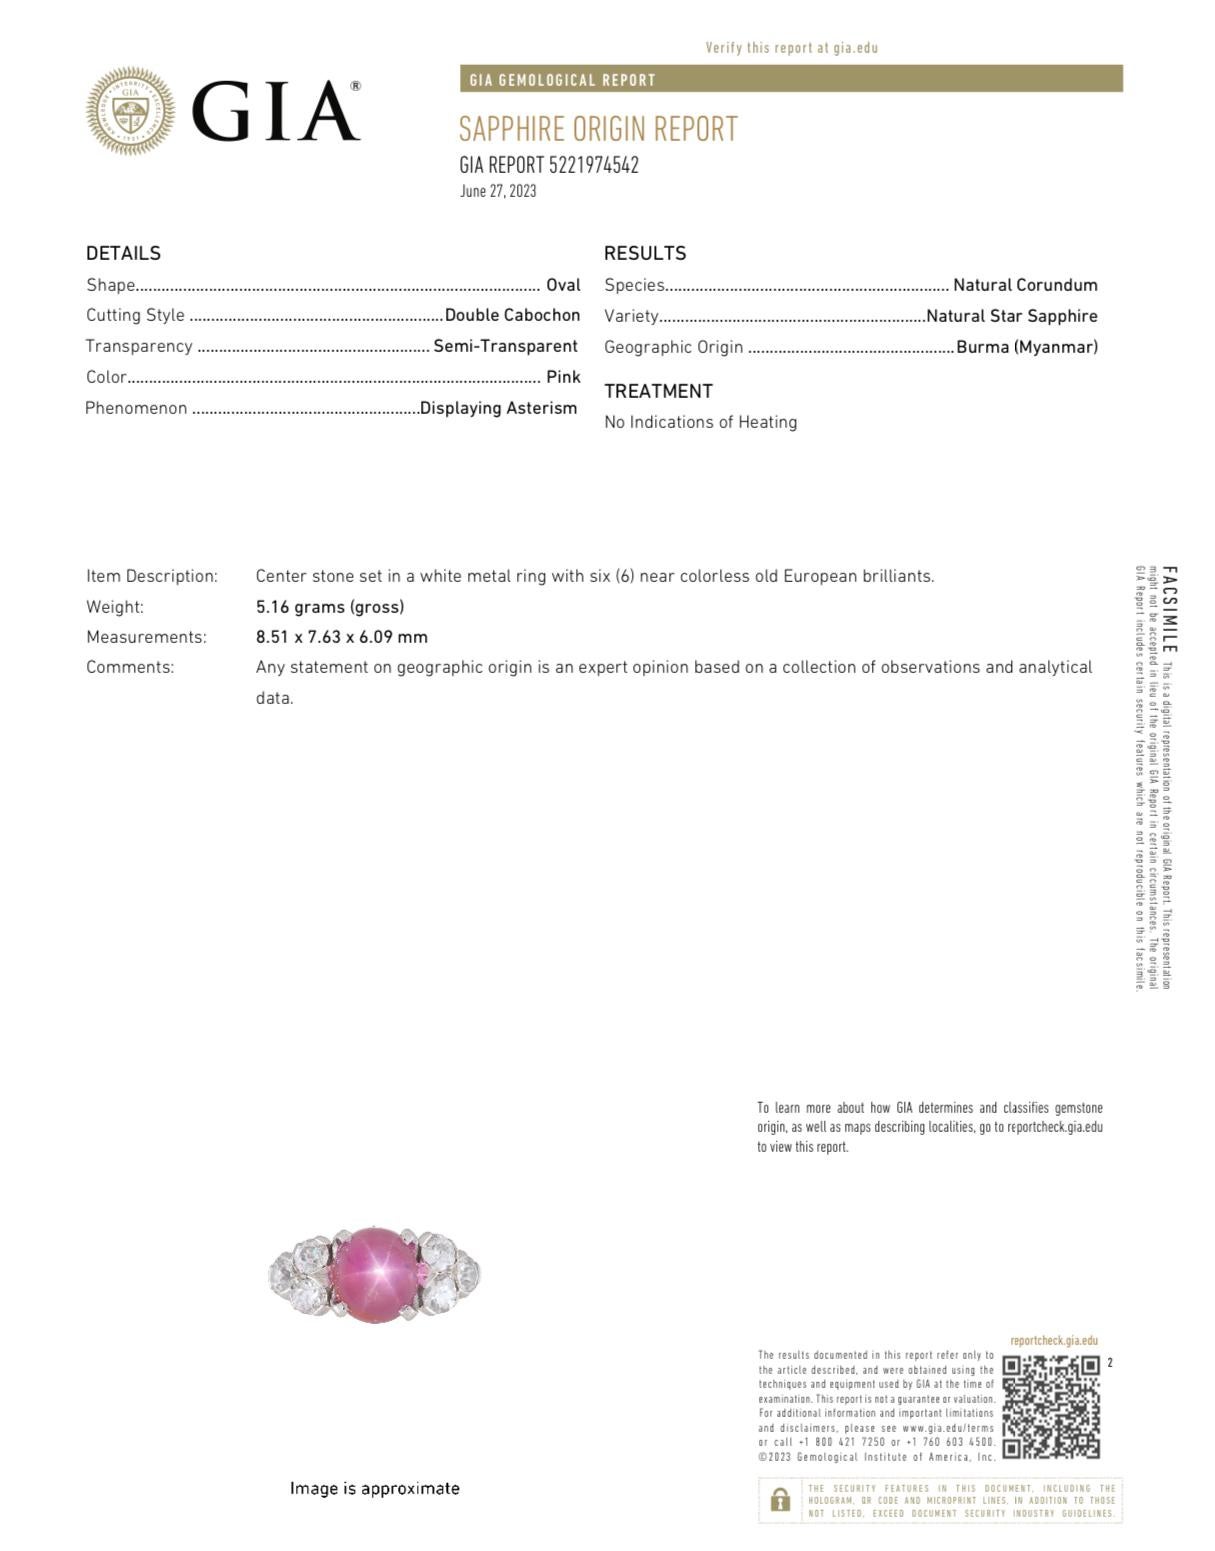 pink sapphire value